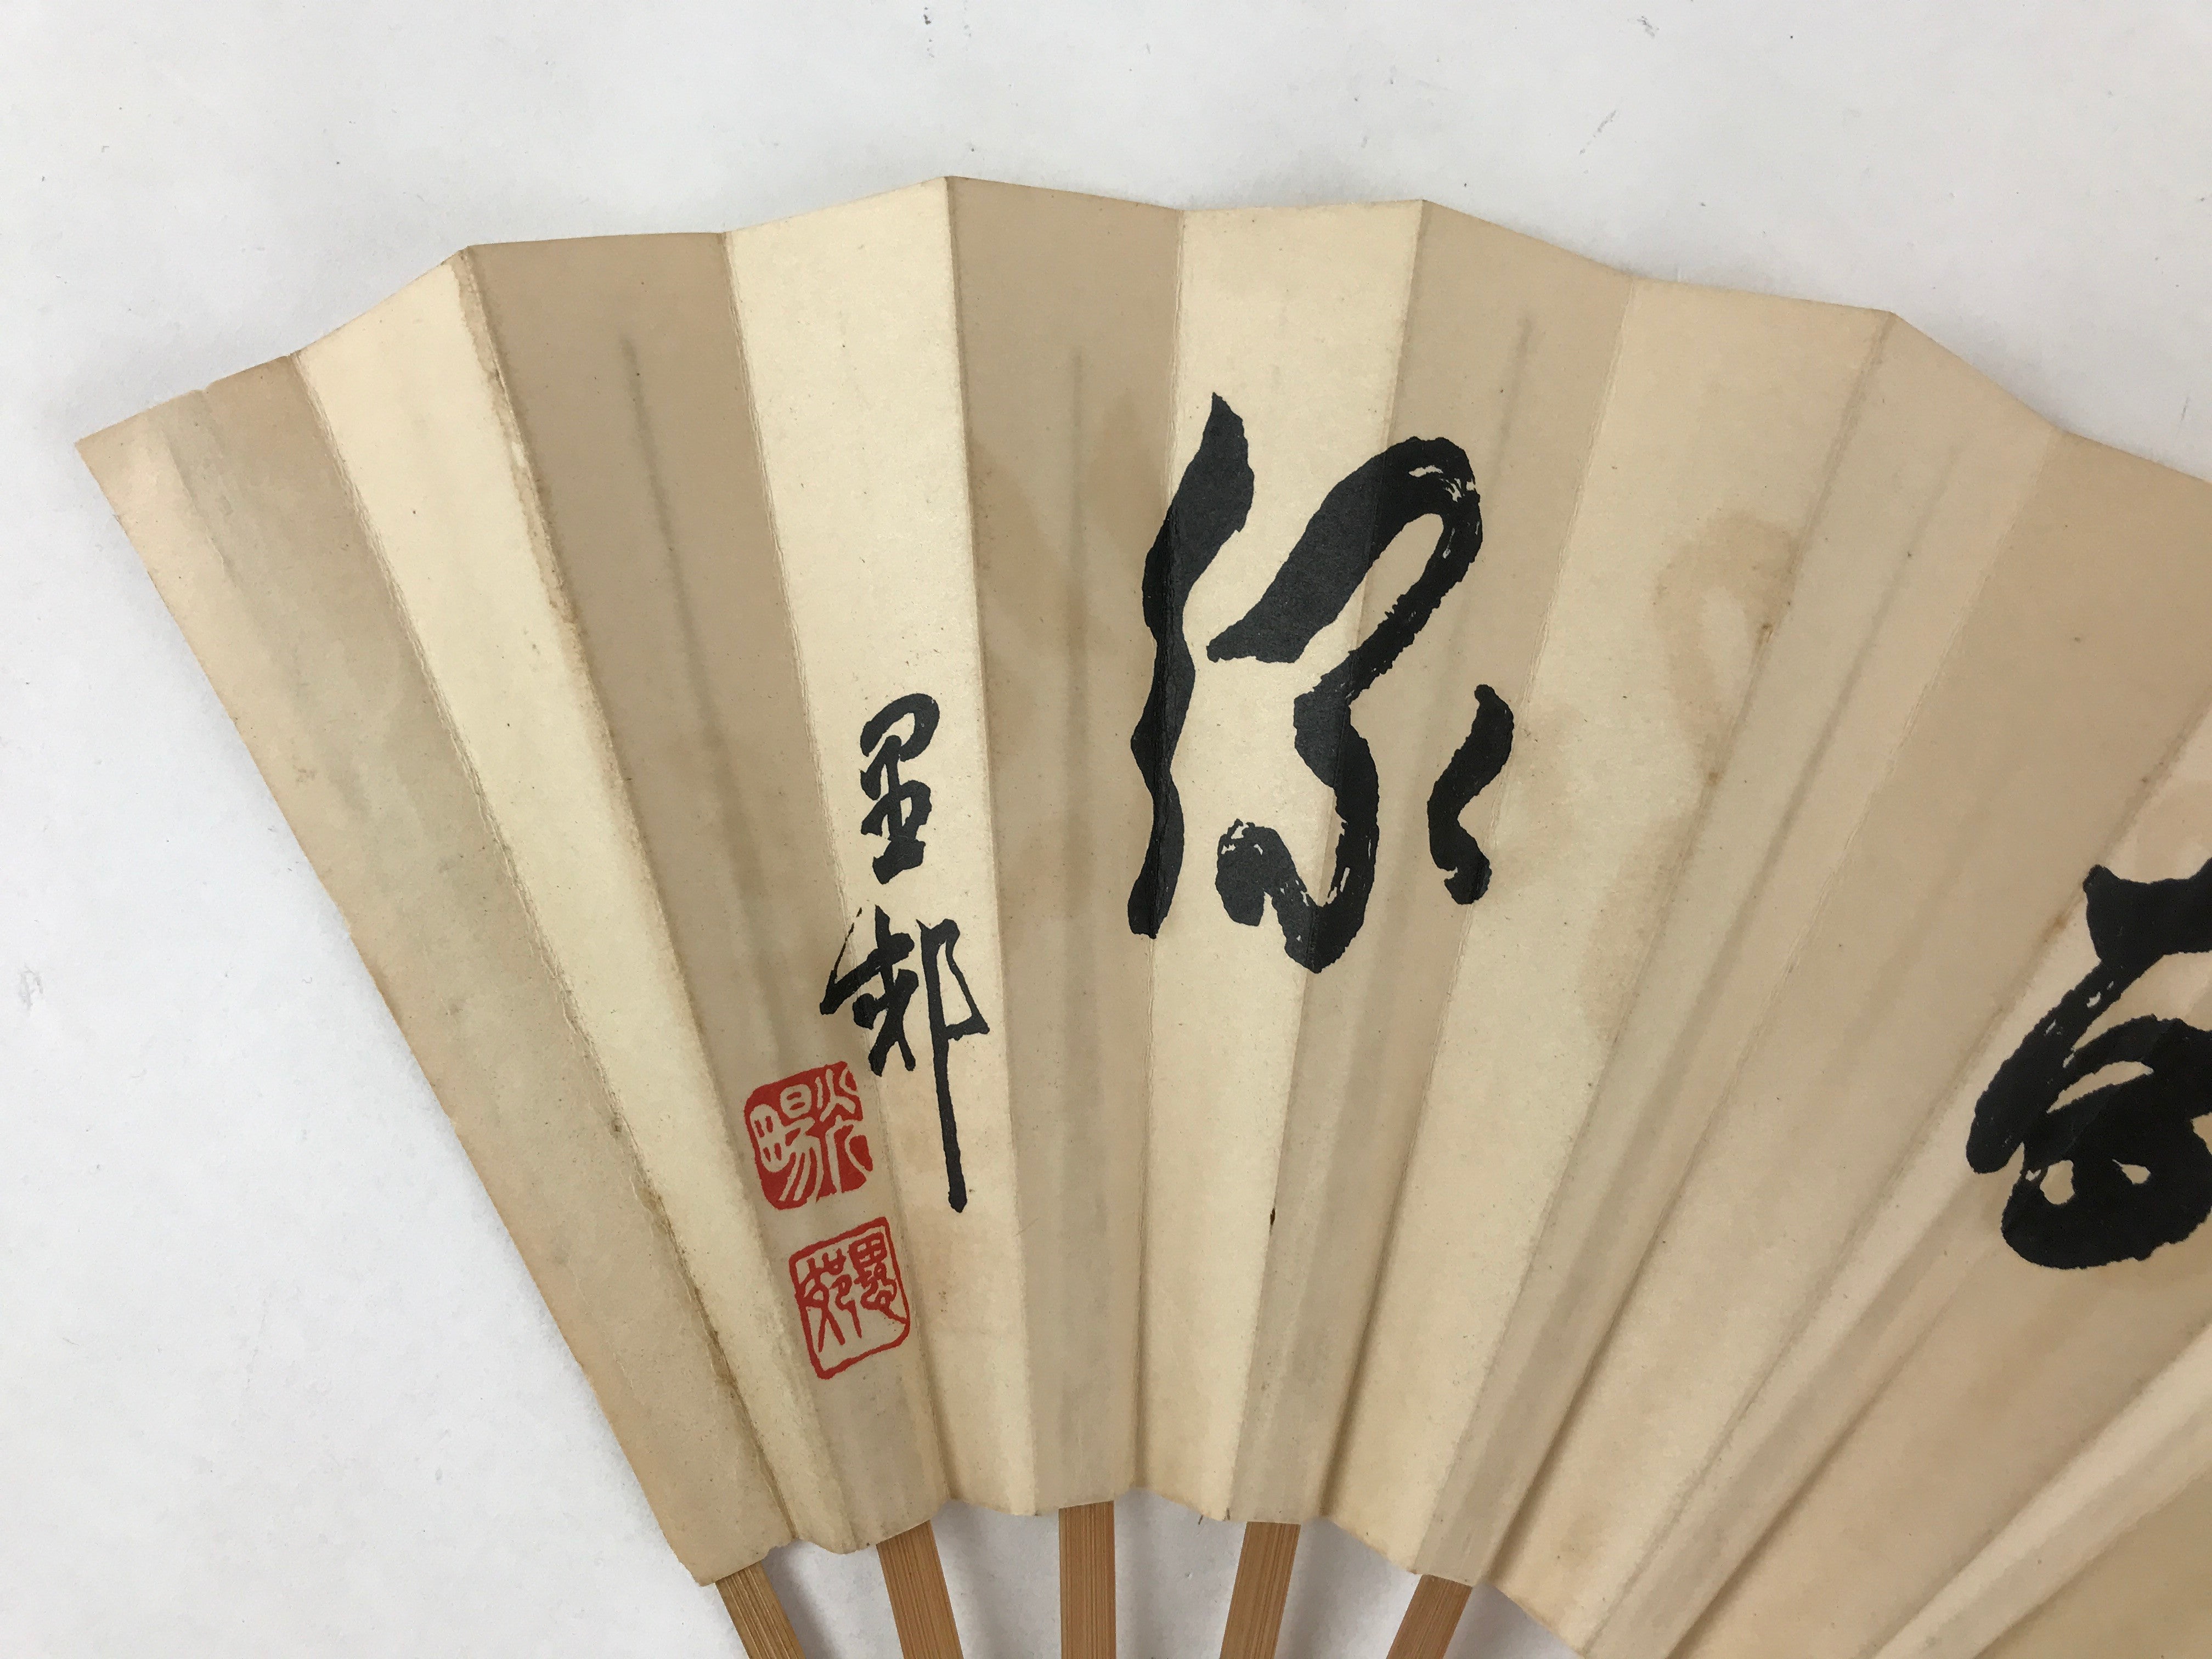 Japanese Paper Folding Fan Sensu Bamboo Frame 3 Big Kanji Characters 4D777